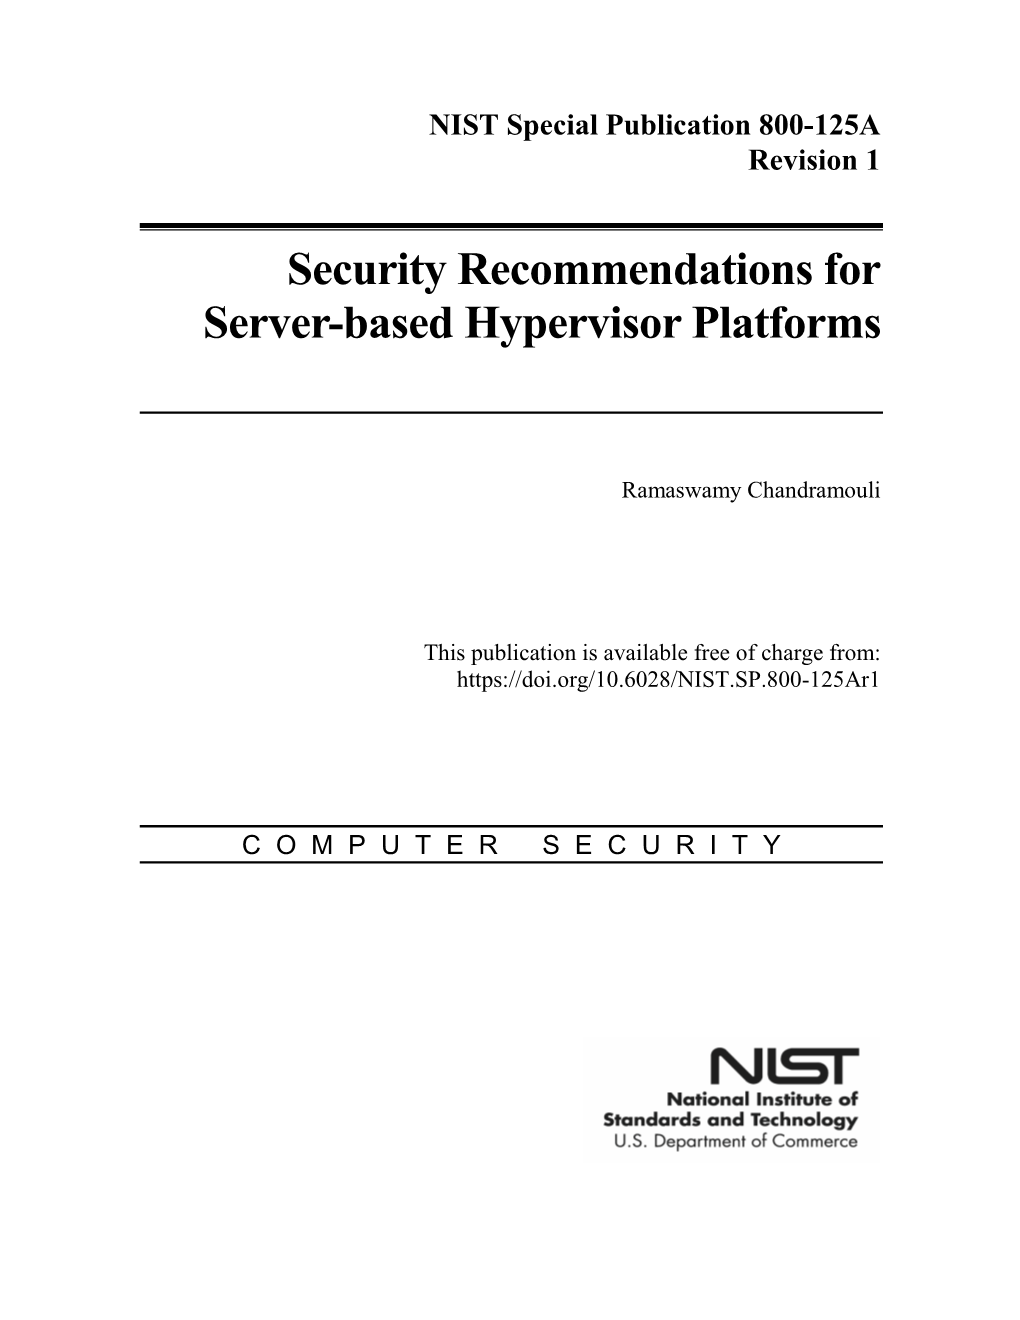 Security Recommendations for Server-Based Hypervisor Platforms